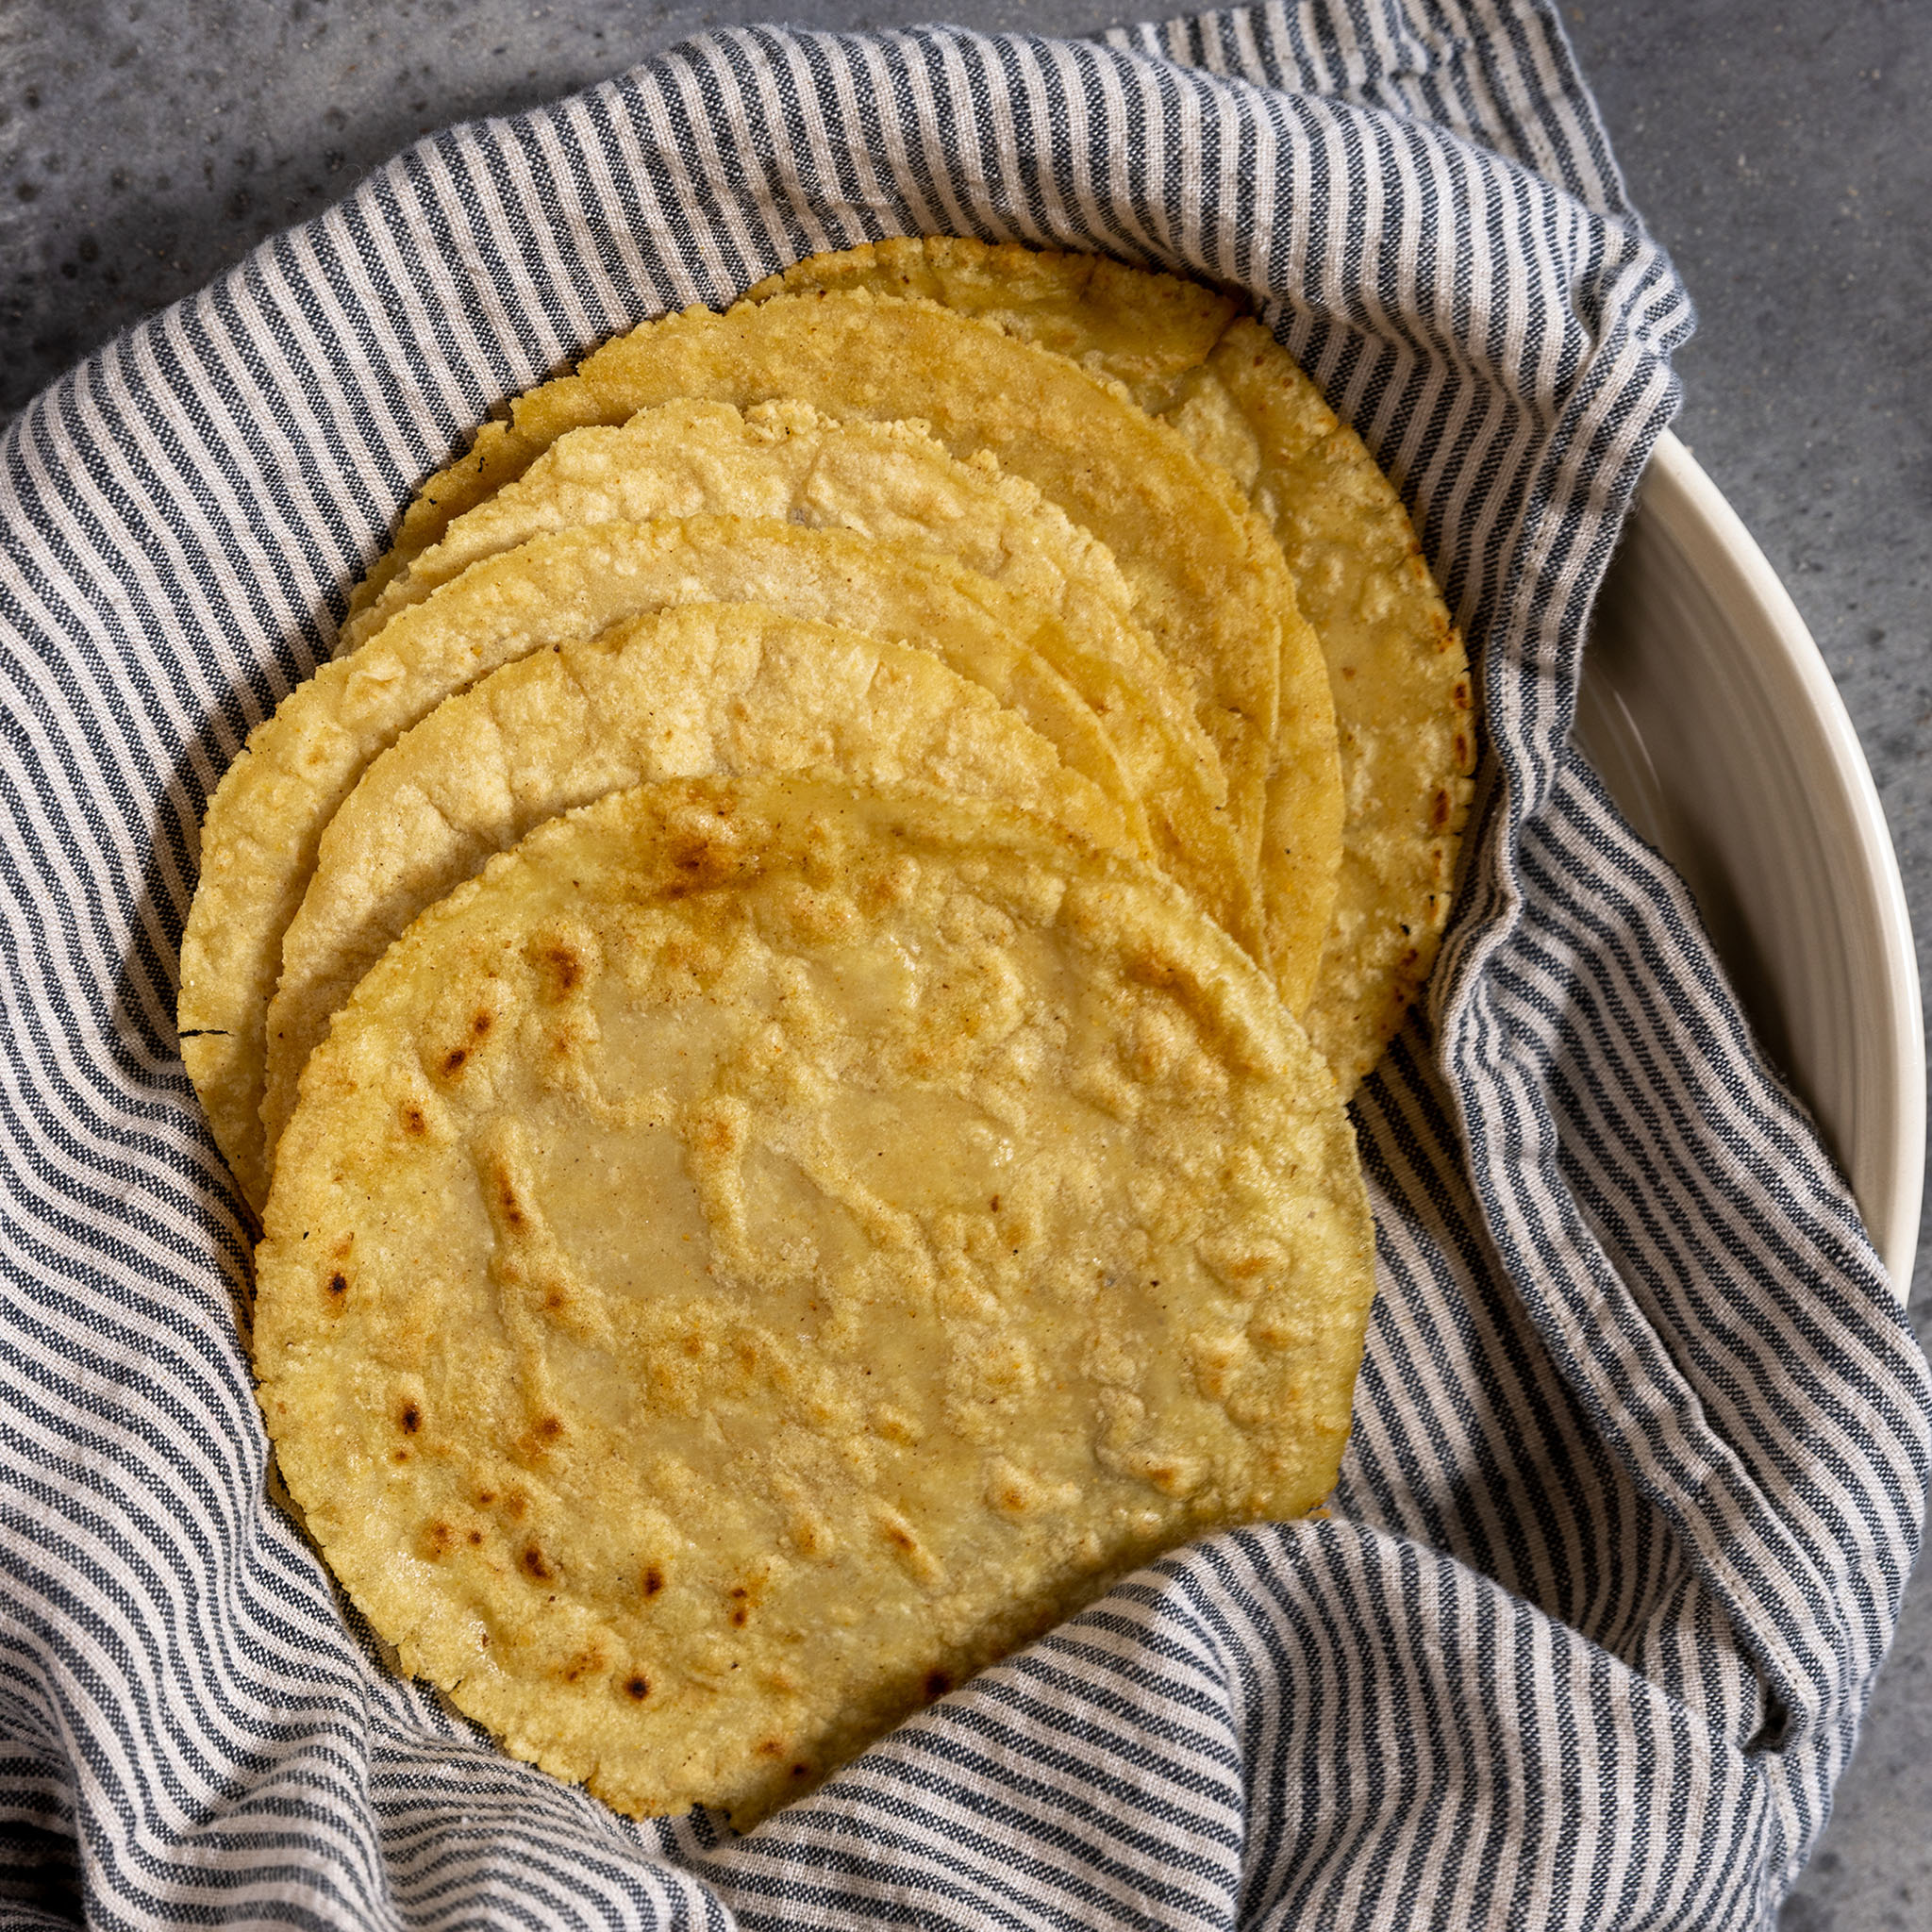 Joanna Gaines' Homemade Corn Tortillas